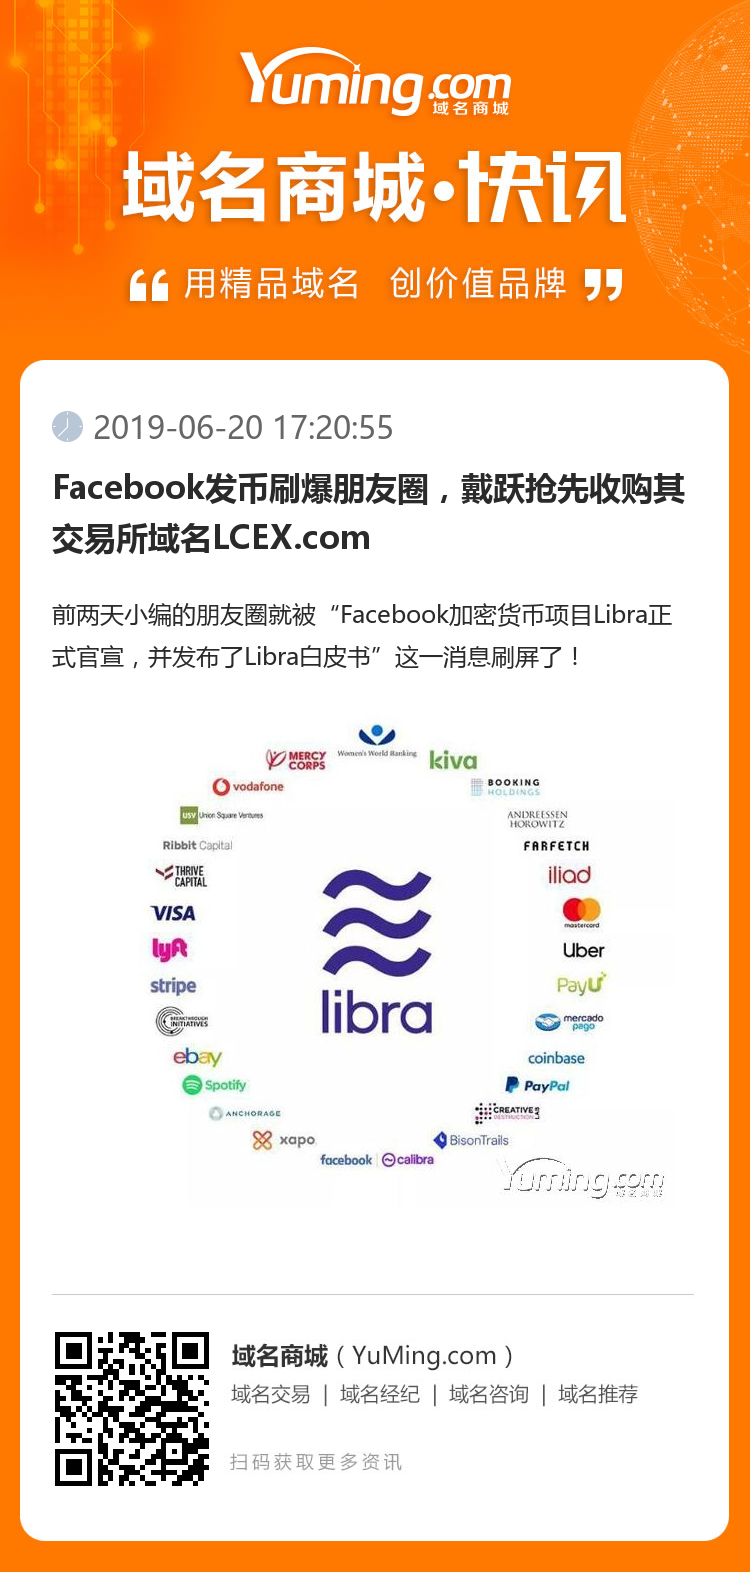 Facebook发币刷爆朋友圈，戴跃抢先收购其交易所域名LCEX.com